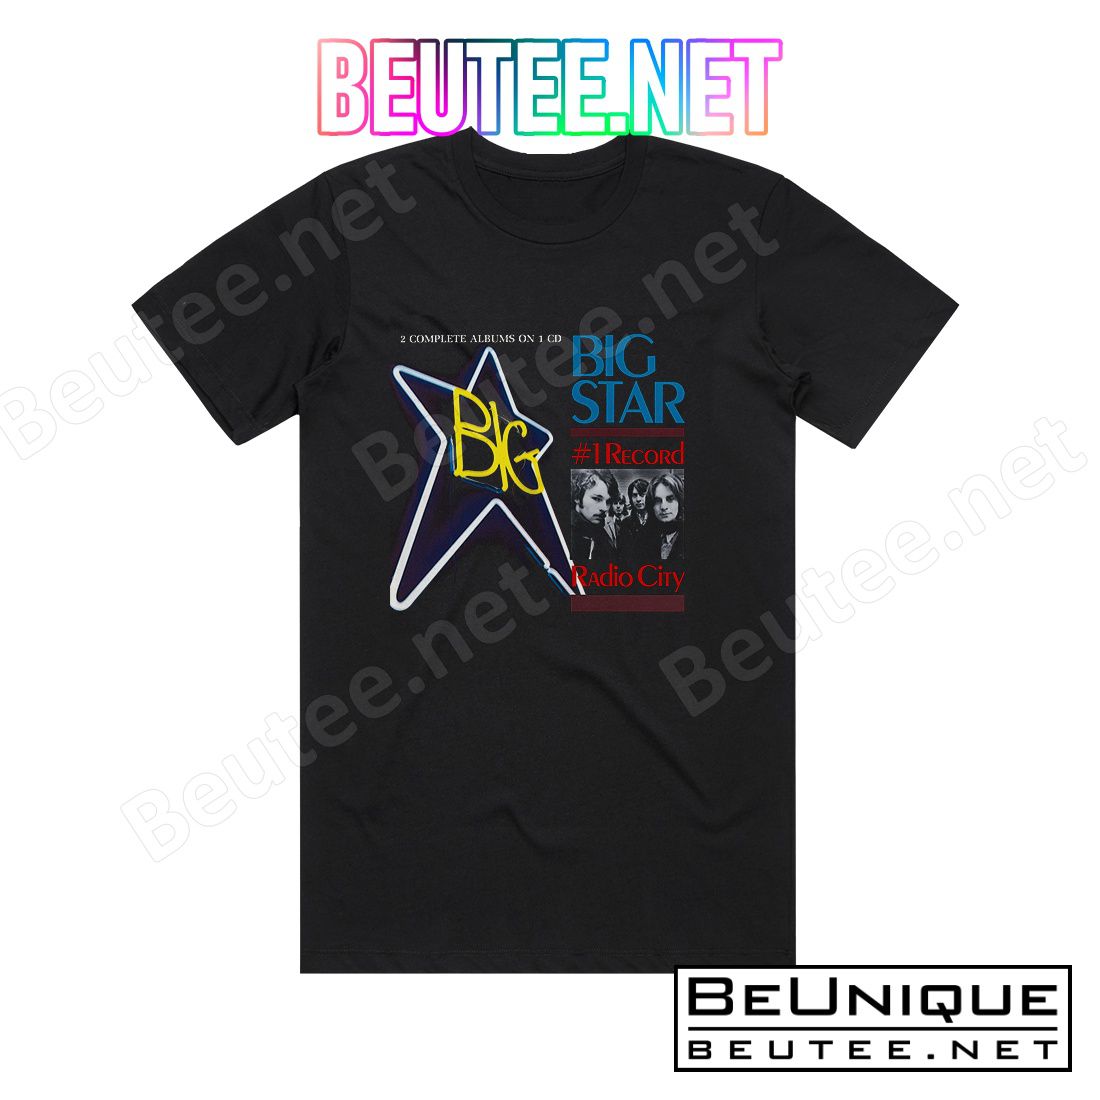 Big Star 1 Record Radio City Album Cover T-Shirt